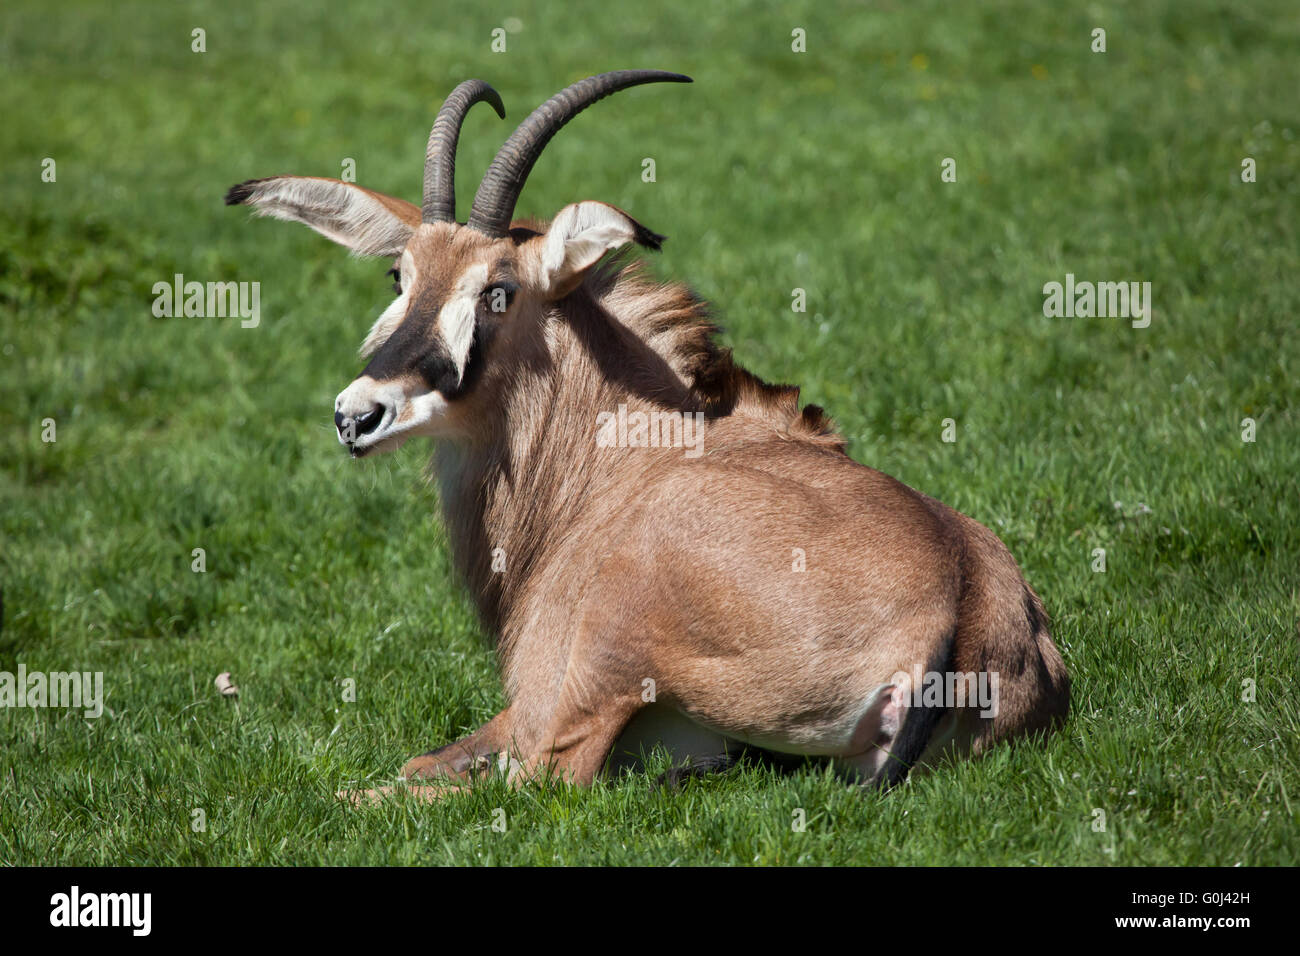 Roan antelope (Hippotragus equinus) at Dvur Kralove Zoo, Czech Republic. Stock Photo